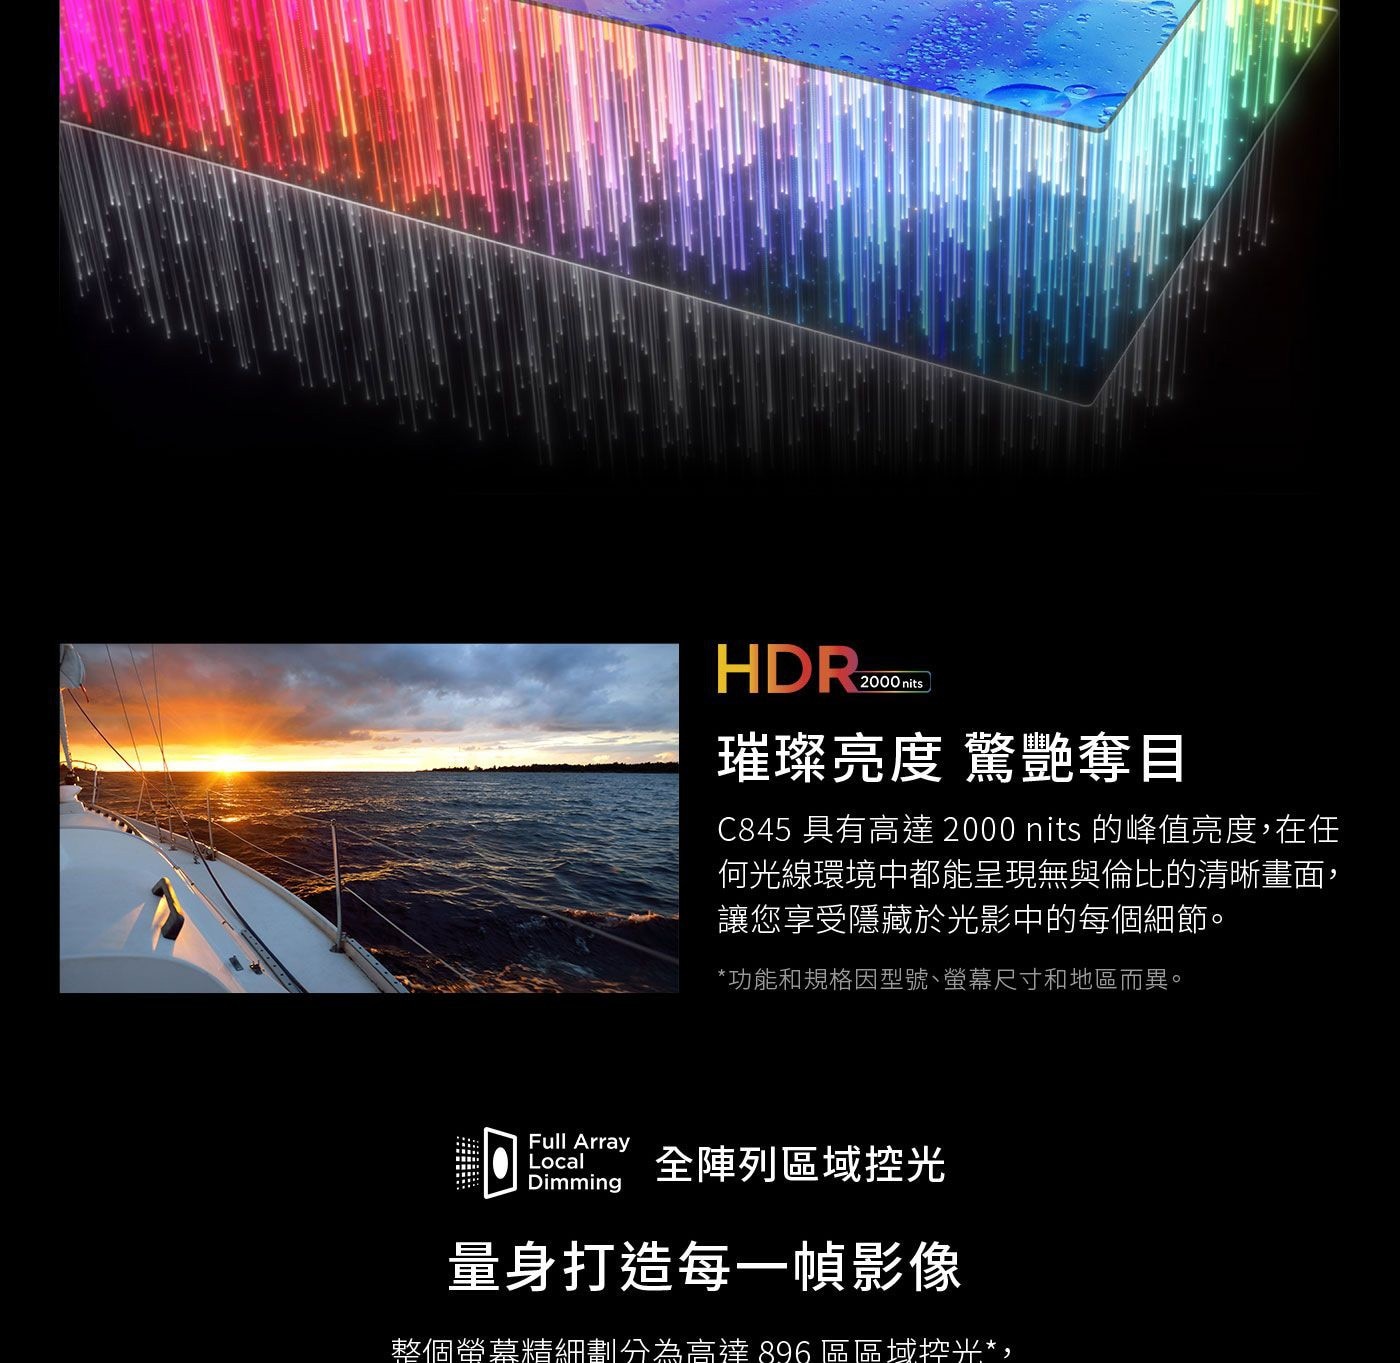 TCL 55吋 4K Mini LED QLED Google TV 量子智能連網液晶顯示器 55C845璀璨亮度驚艷奪目HDR 2000 nits璀璨亮度 驚艷奪目